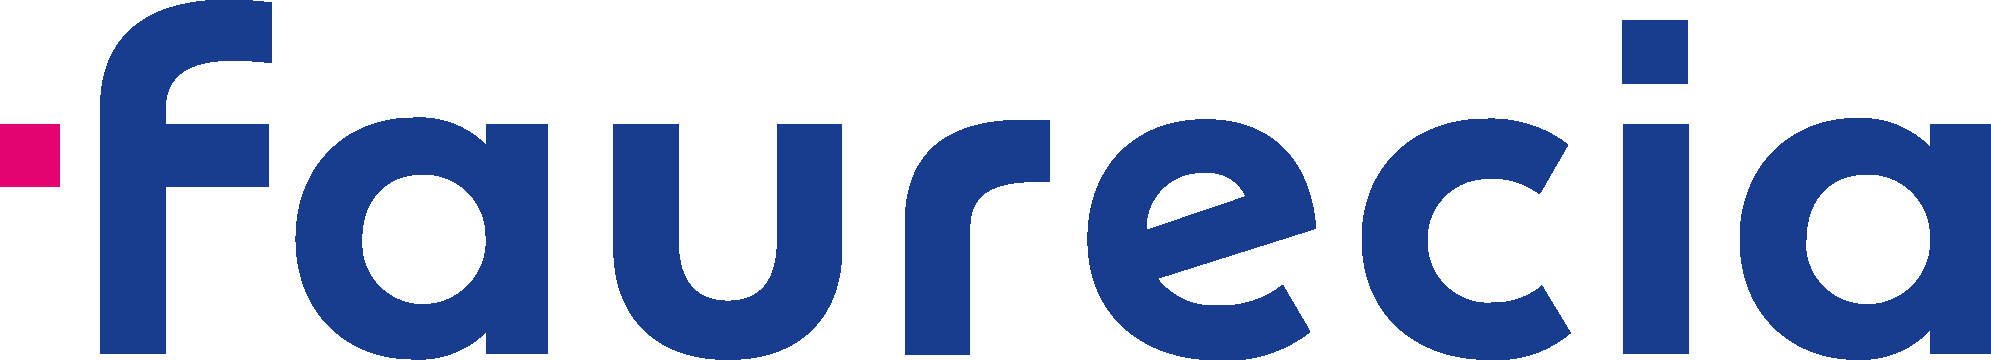 Faurecia_Logo